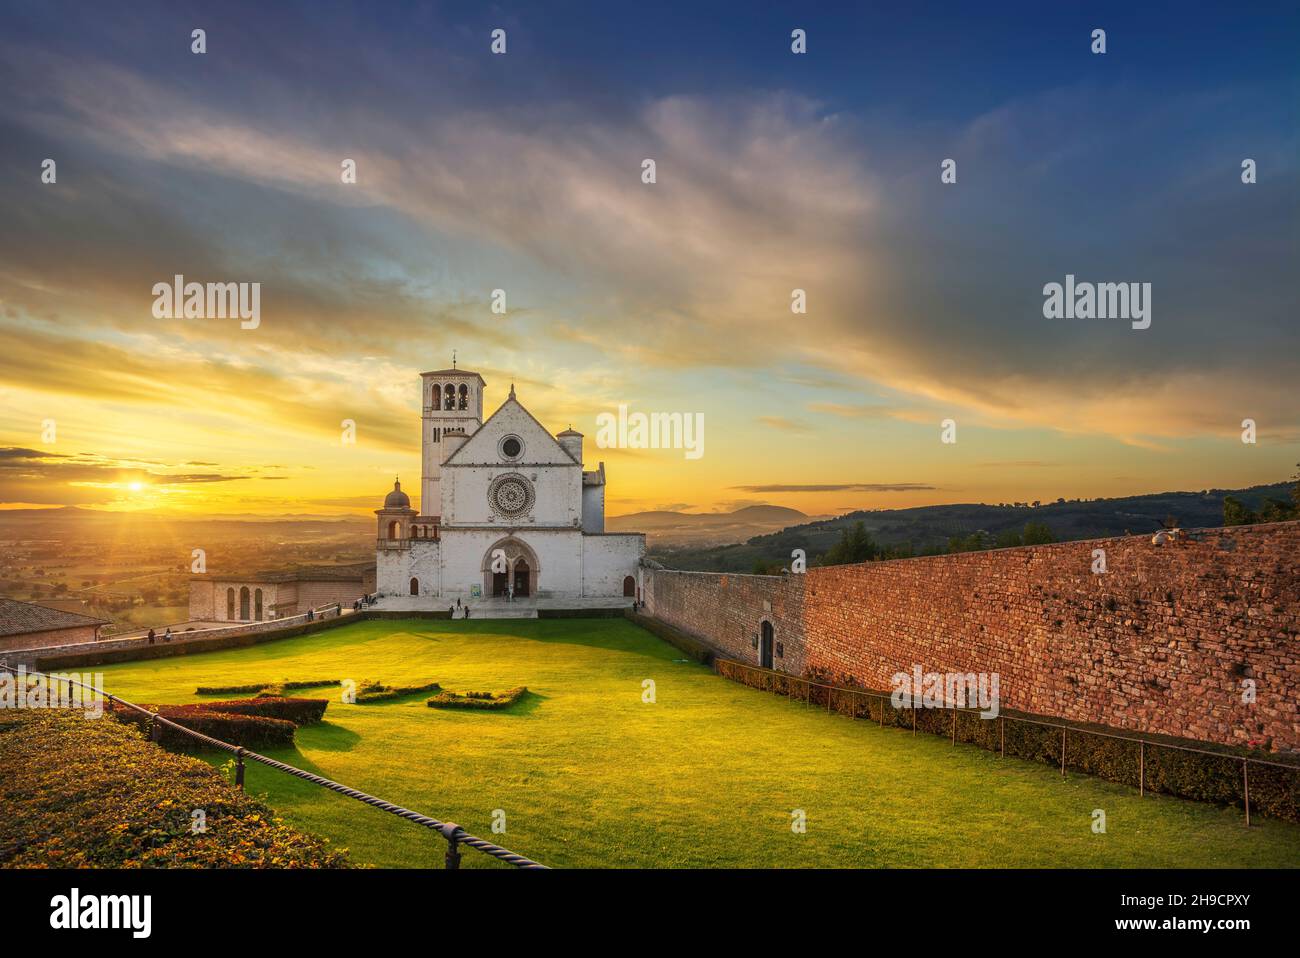 Obere Kirche der Basilika von Assisi, San Francesco oder Saint Francis bei Sonnenuntergang. Perugia, Region Umbrien, Italien, Europa. Stockfoto